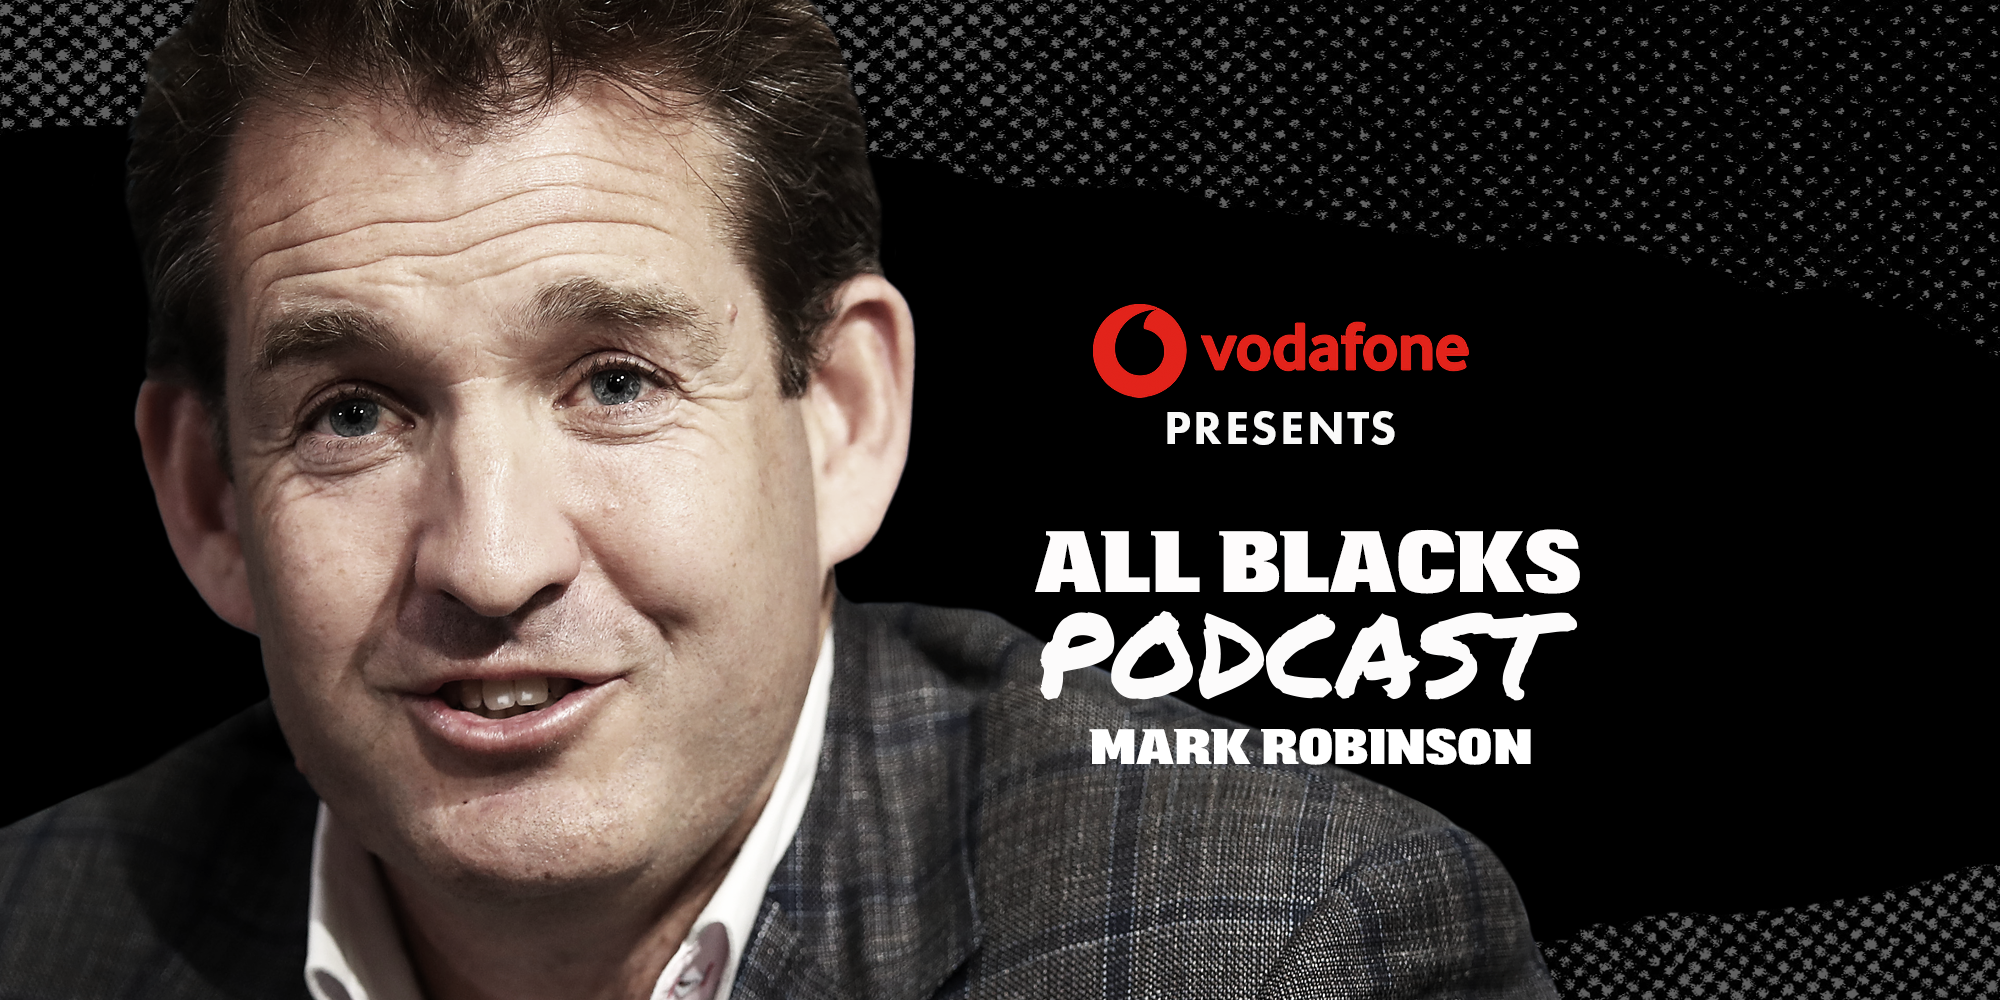 The All Blacks Podcast with Mark Robinson